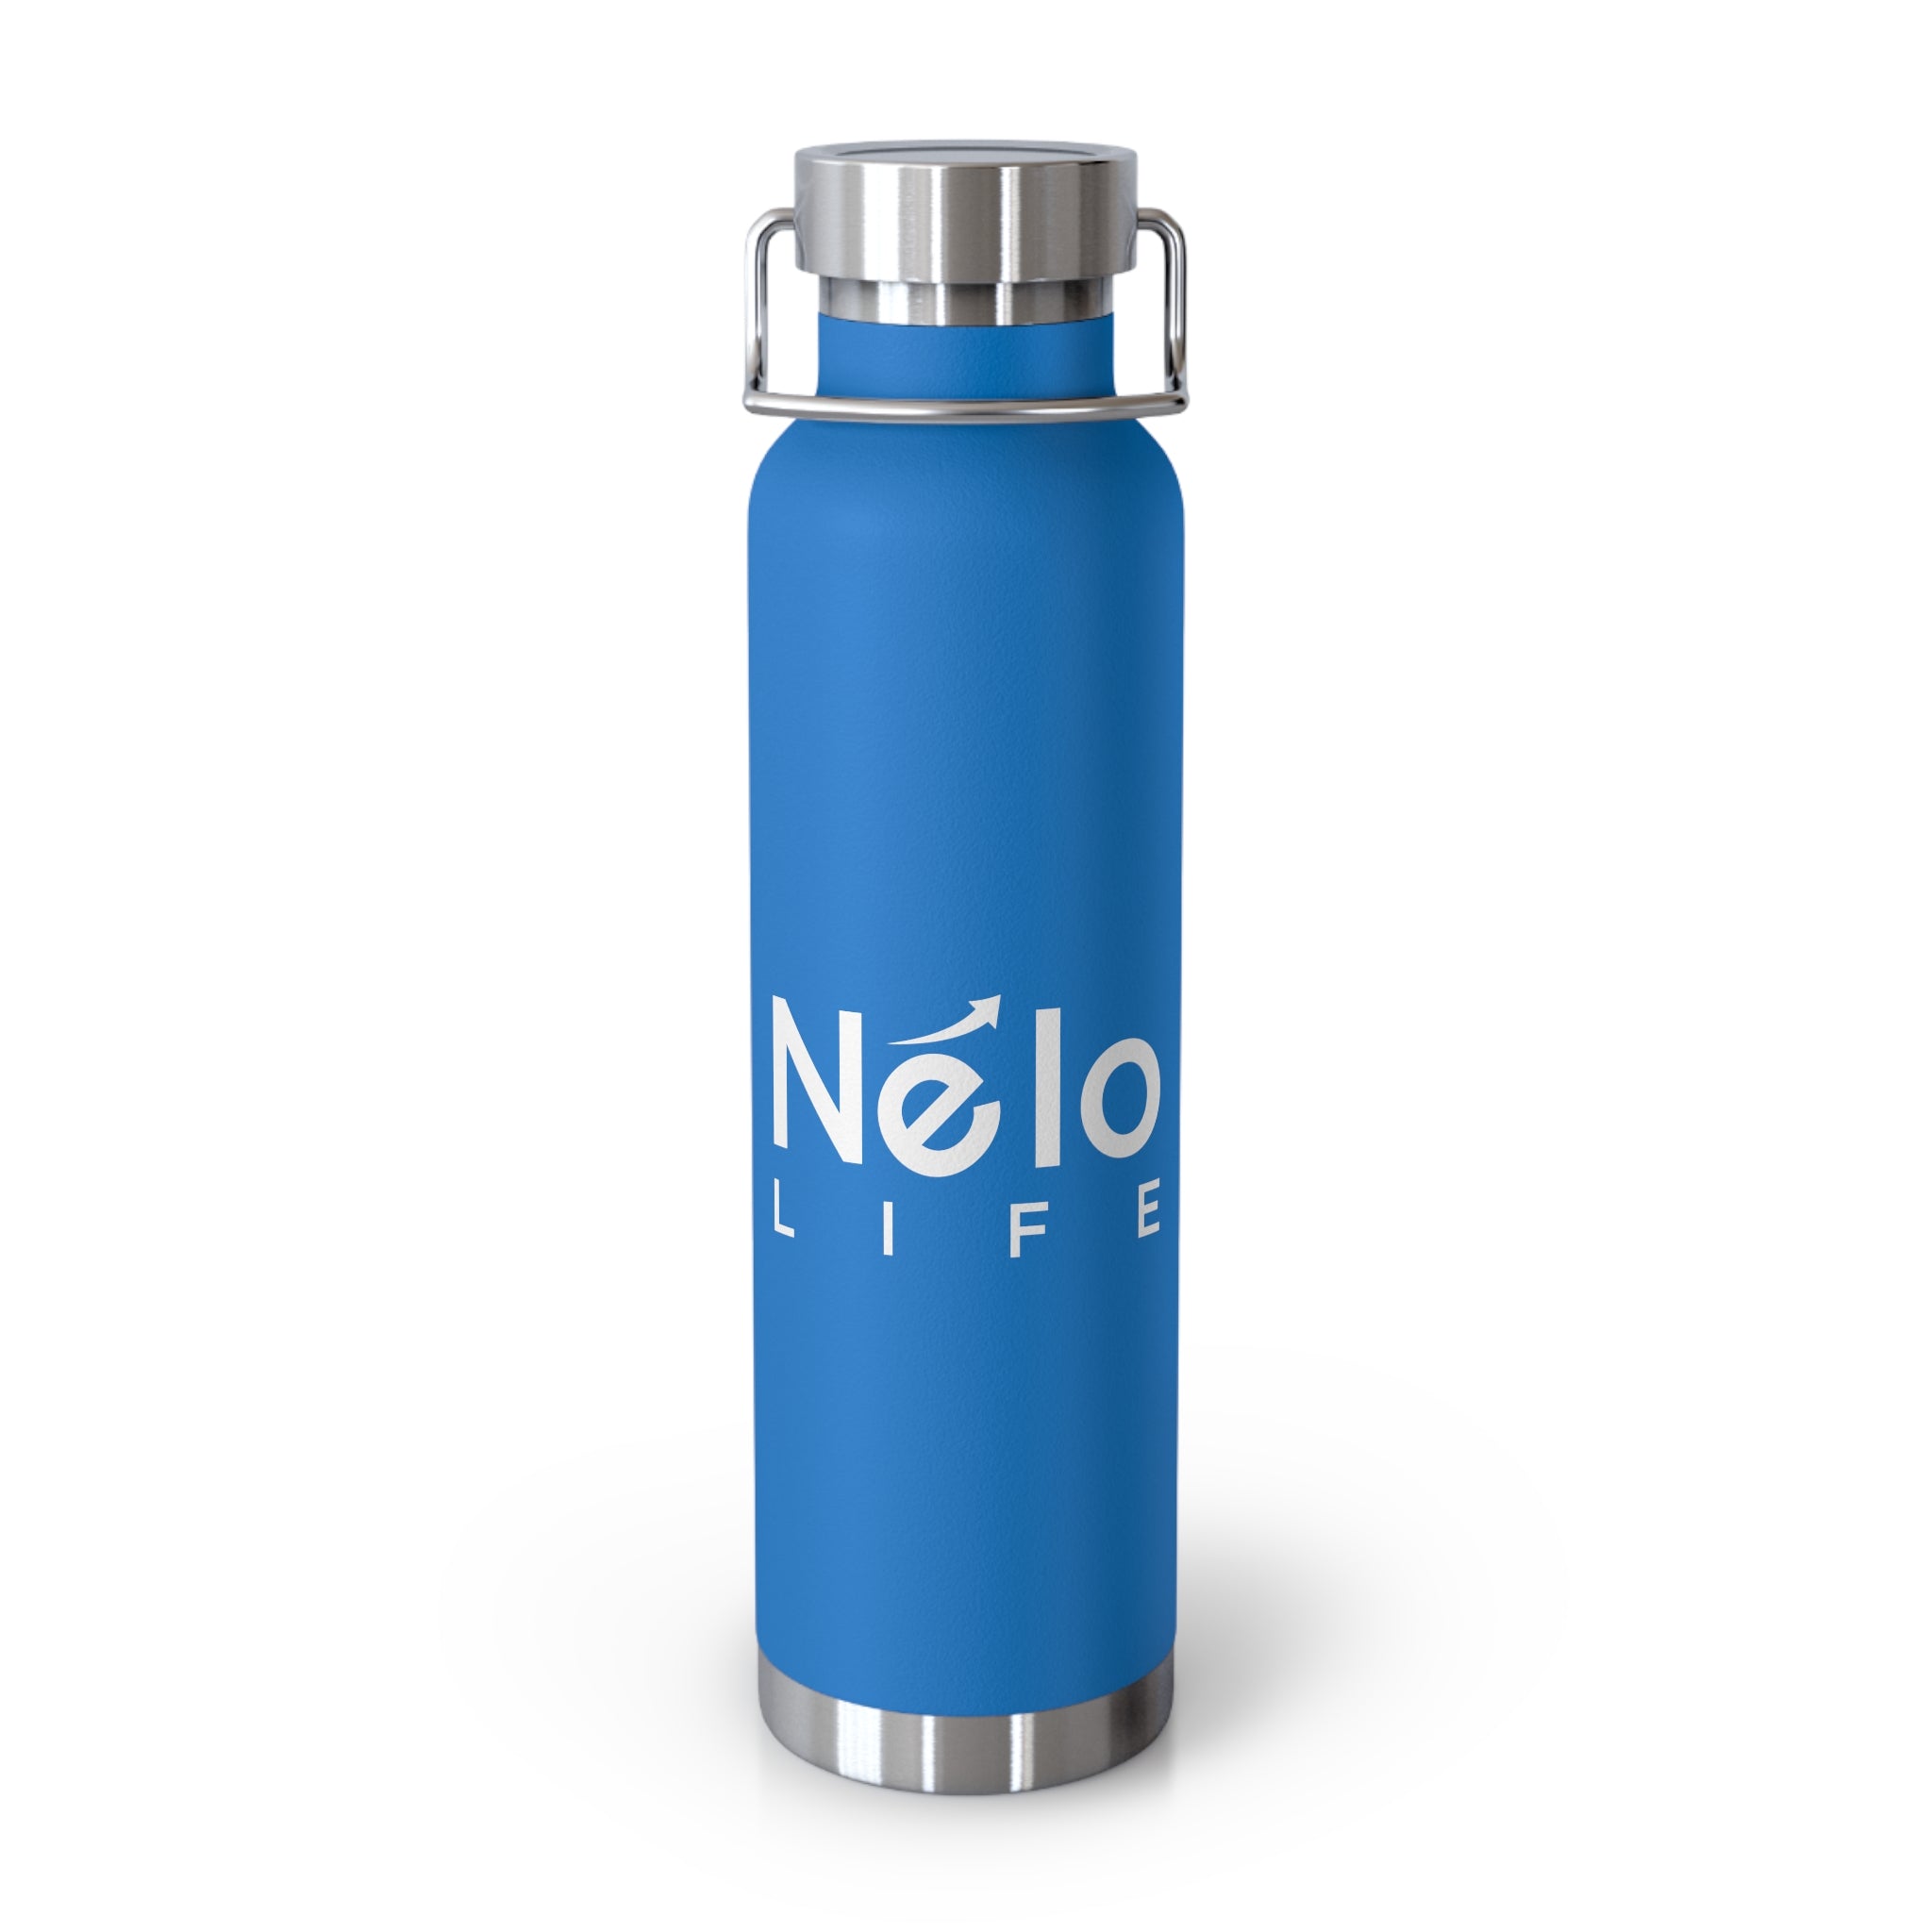 NELO LIFE Copper Vacuum Insulated Bottle